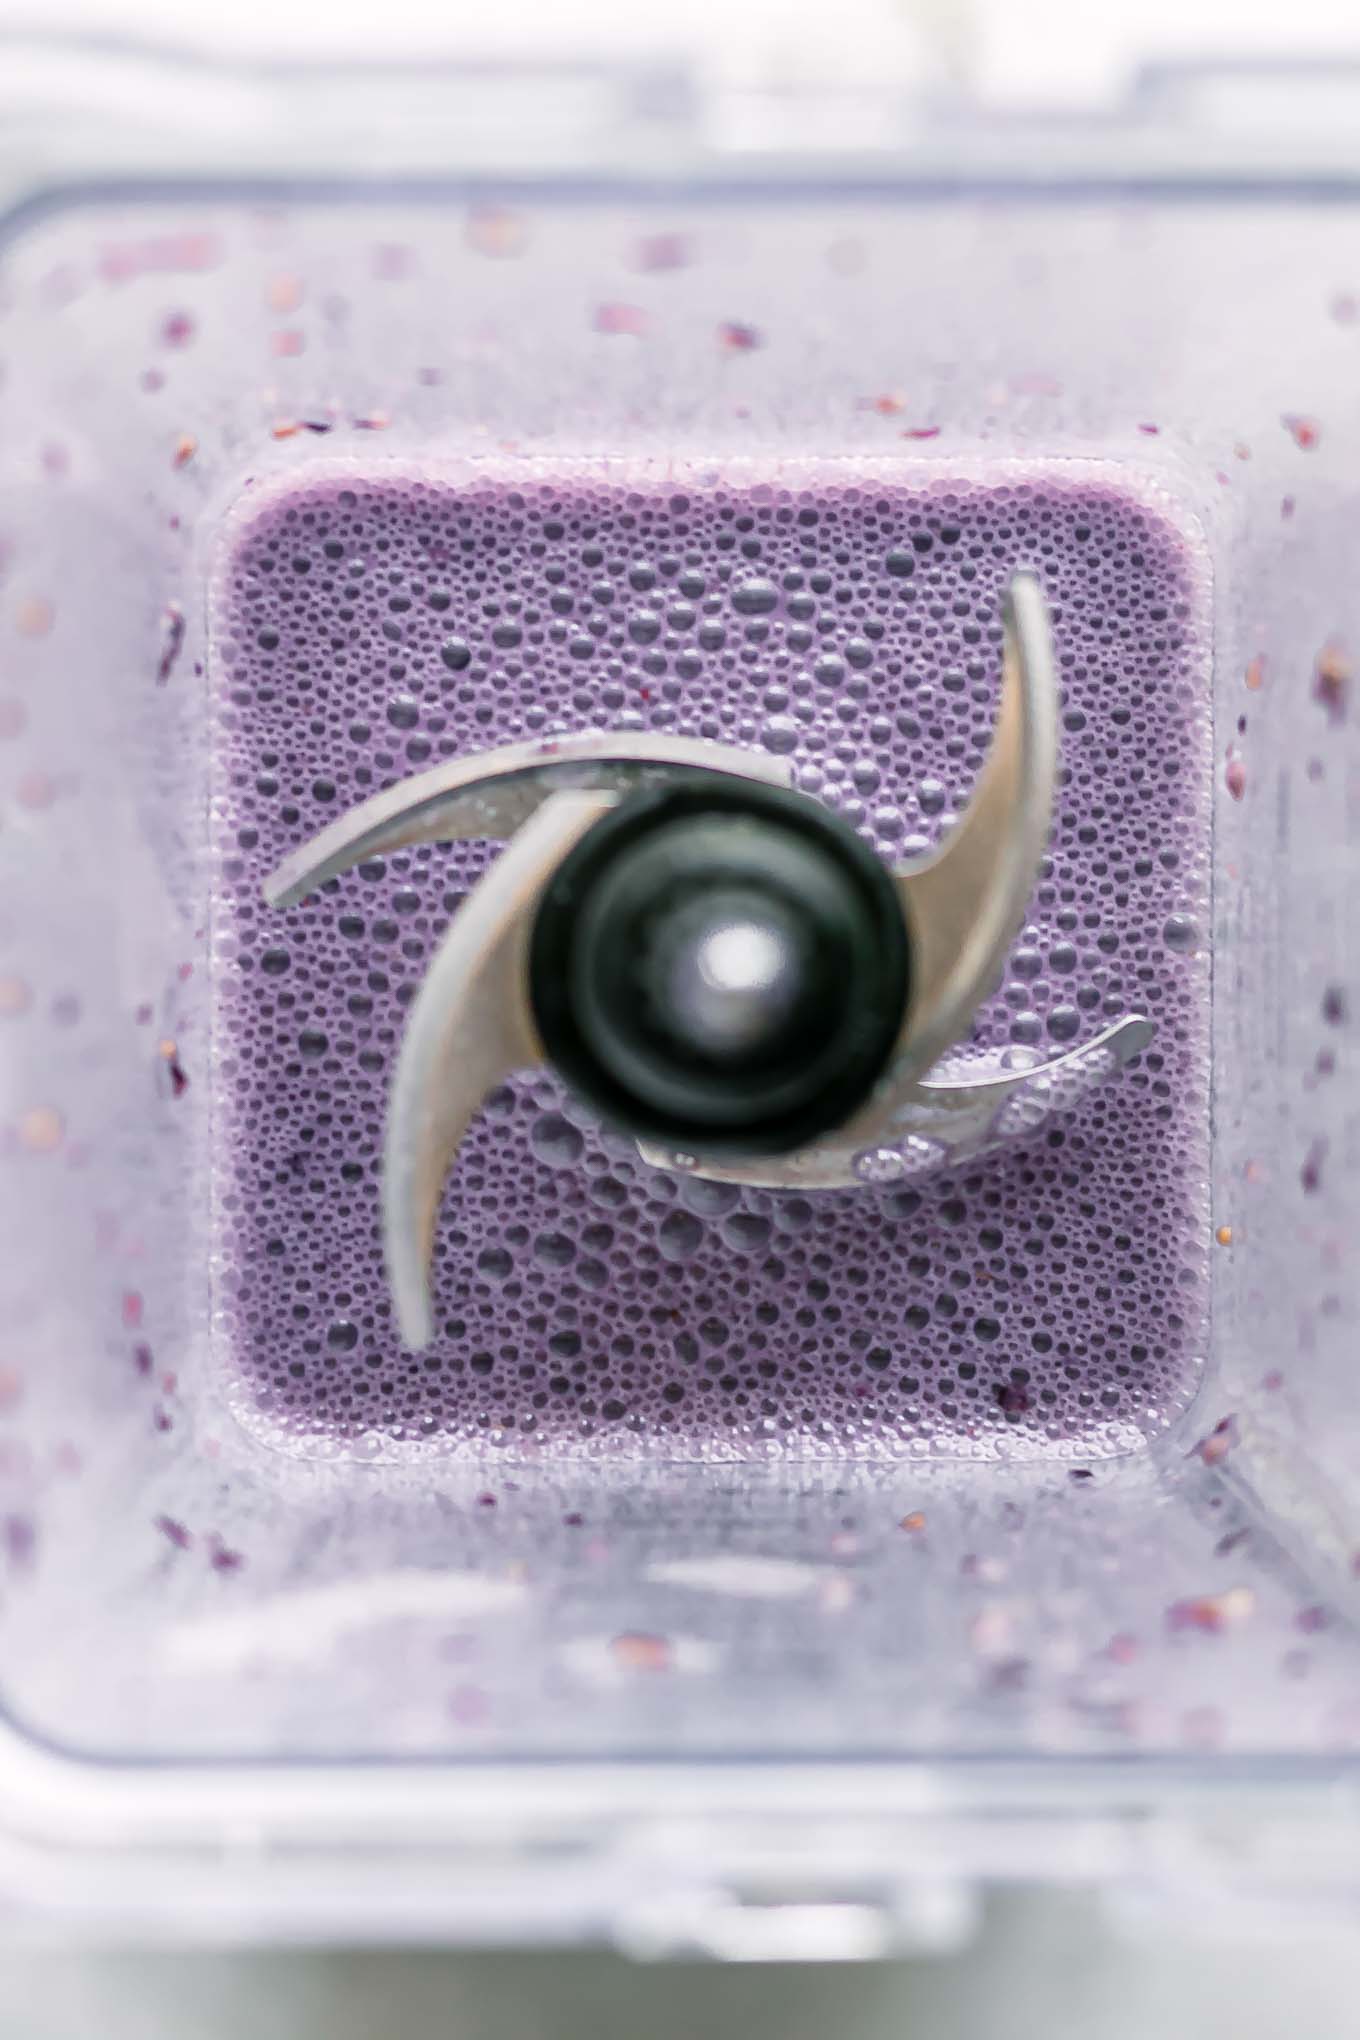 blended blackberry-flavored milk inside a blender